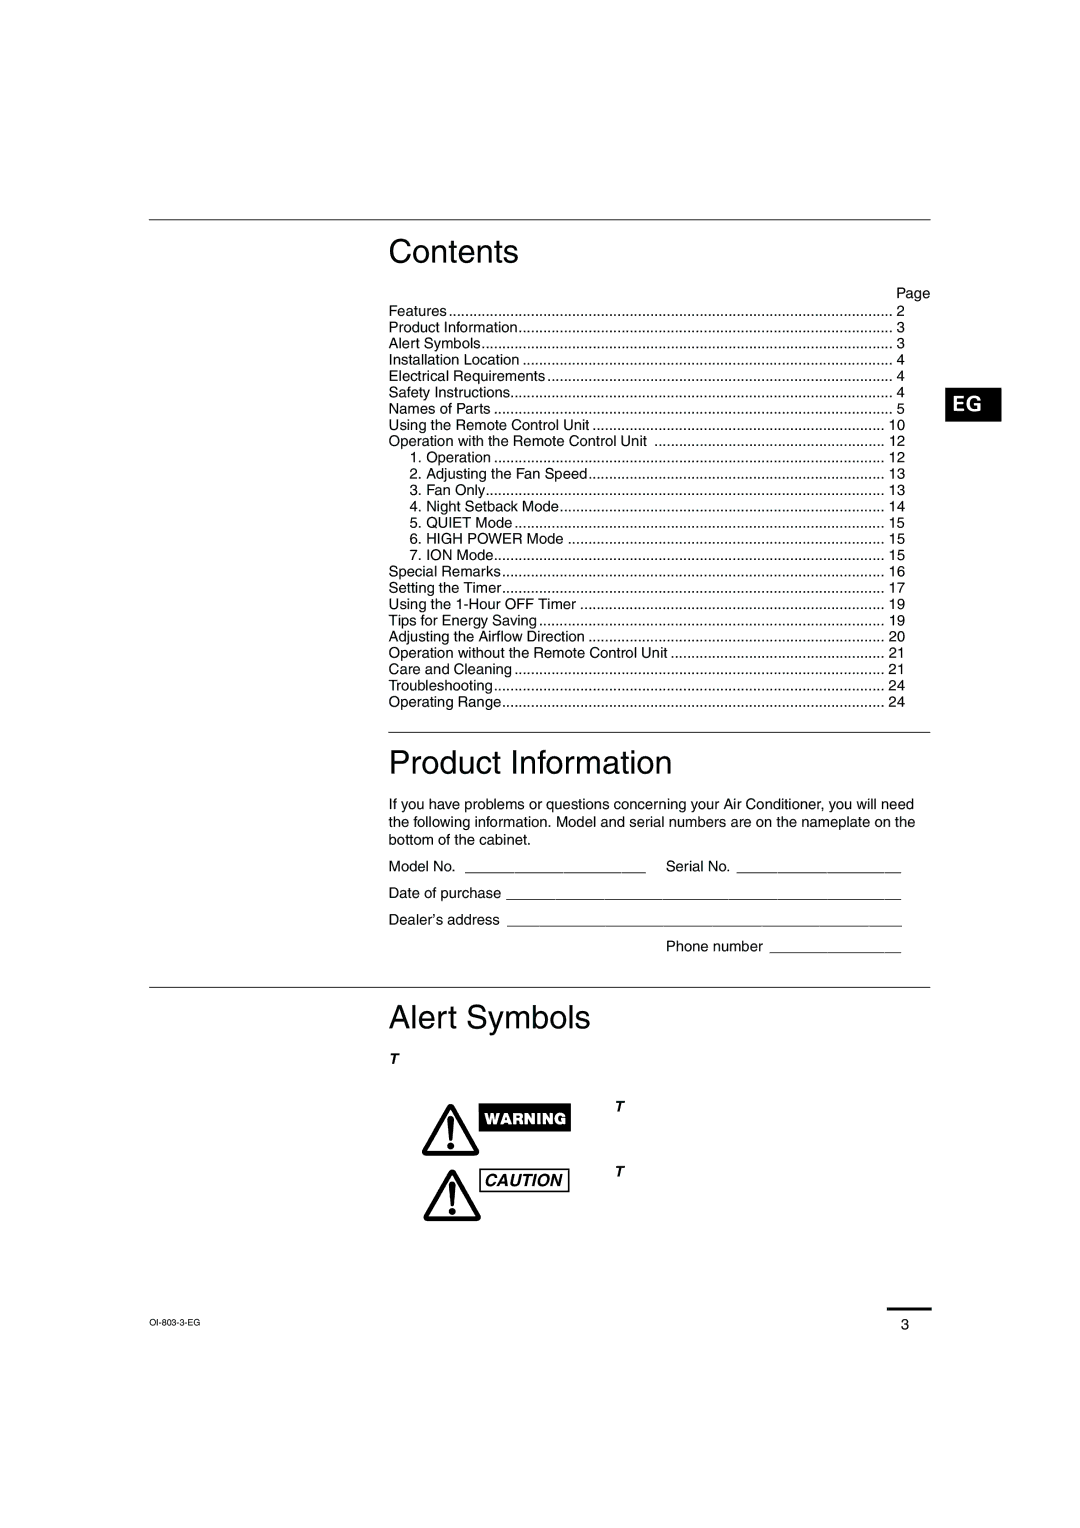 Sanyo KS1271 instruction manual Contents, Product Information, Alert Symbols 